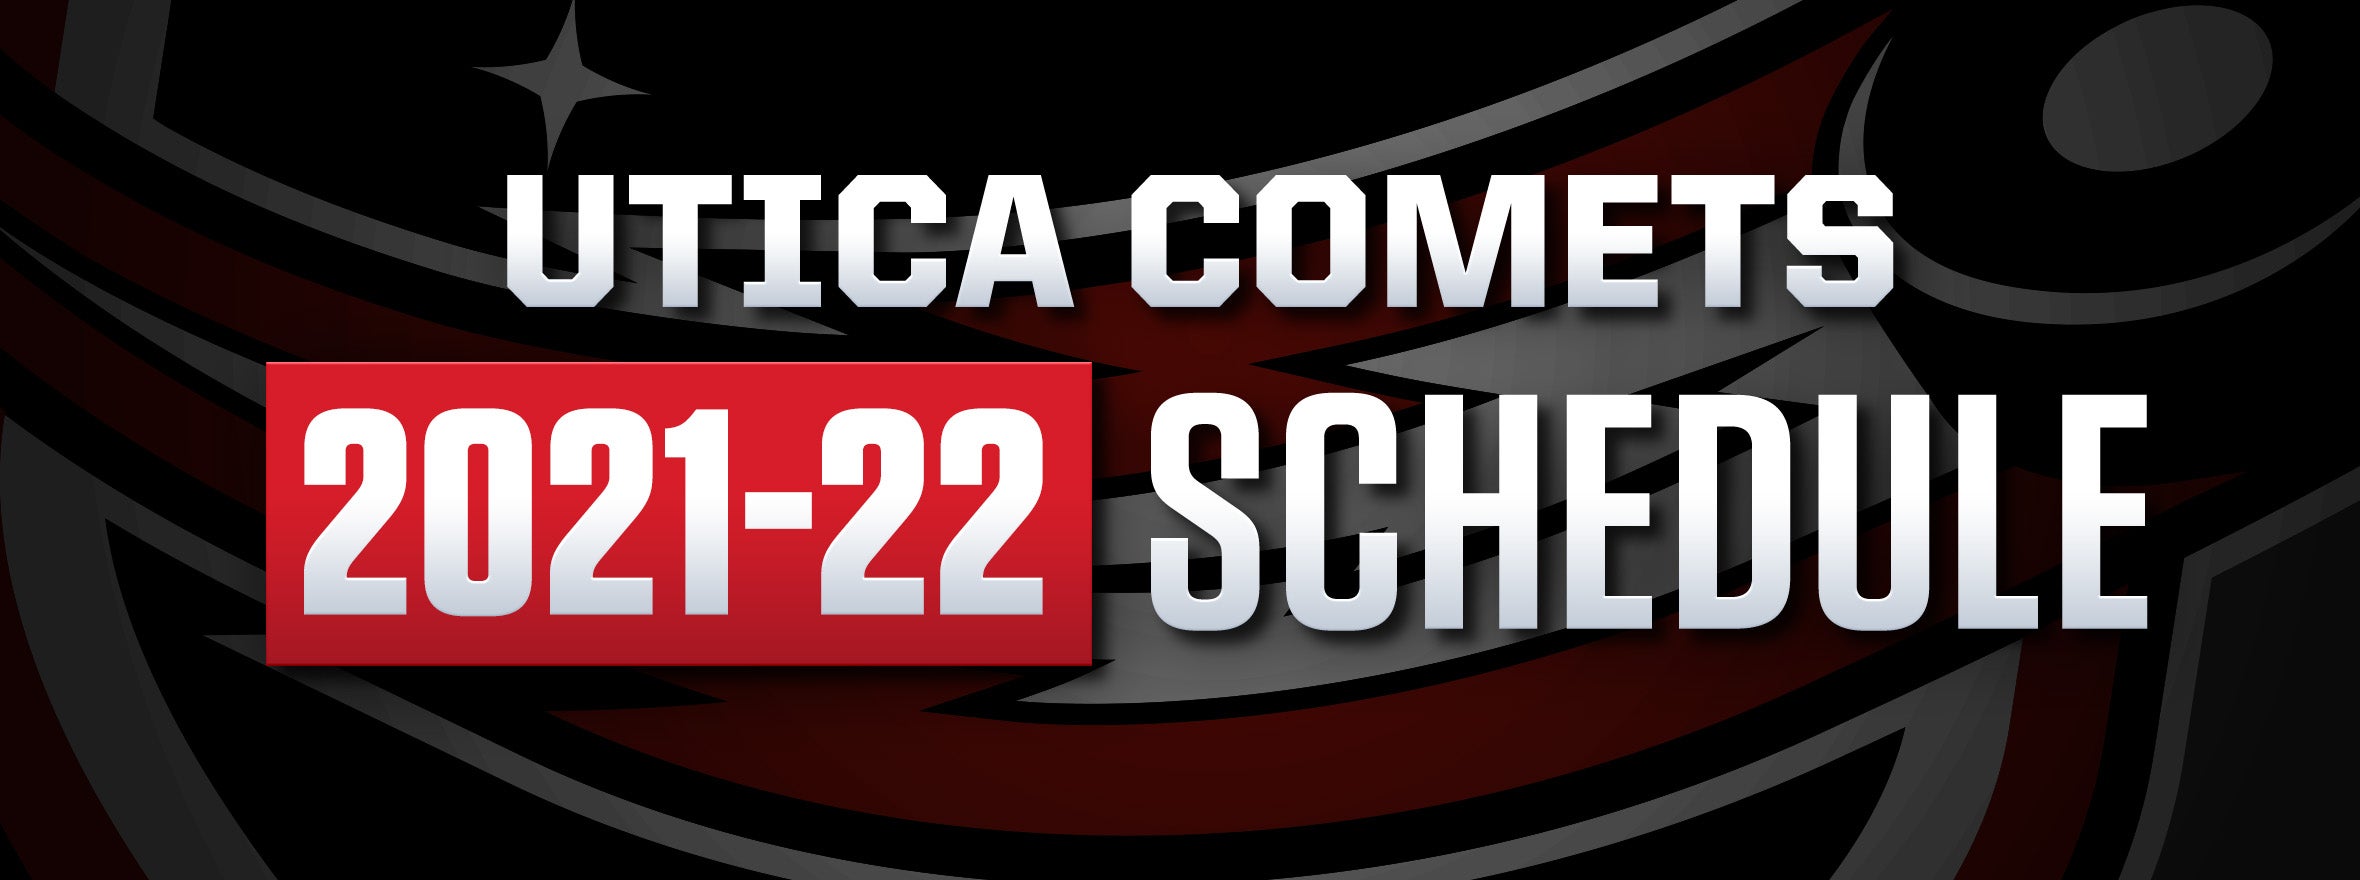 UTICA COMETS ANNOUNCE 202122 SCHEDULE Utica Comets Official Website